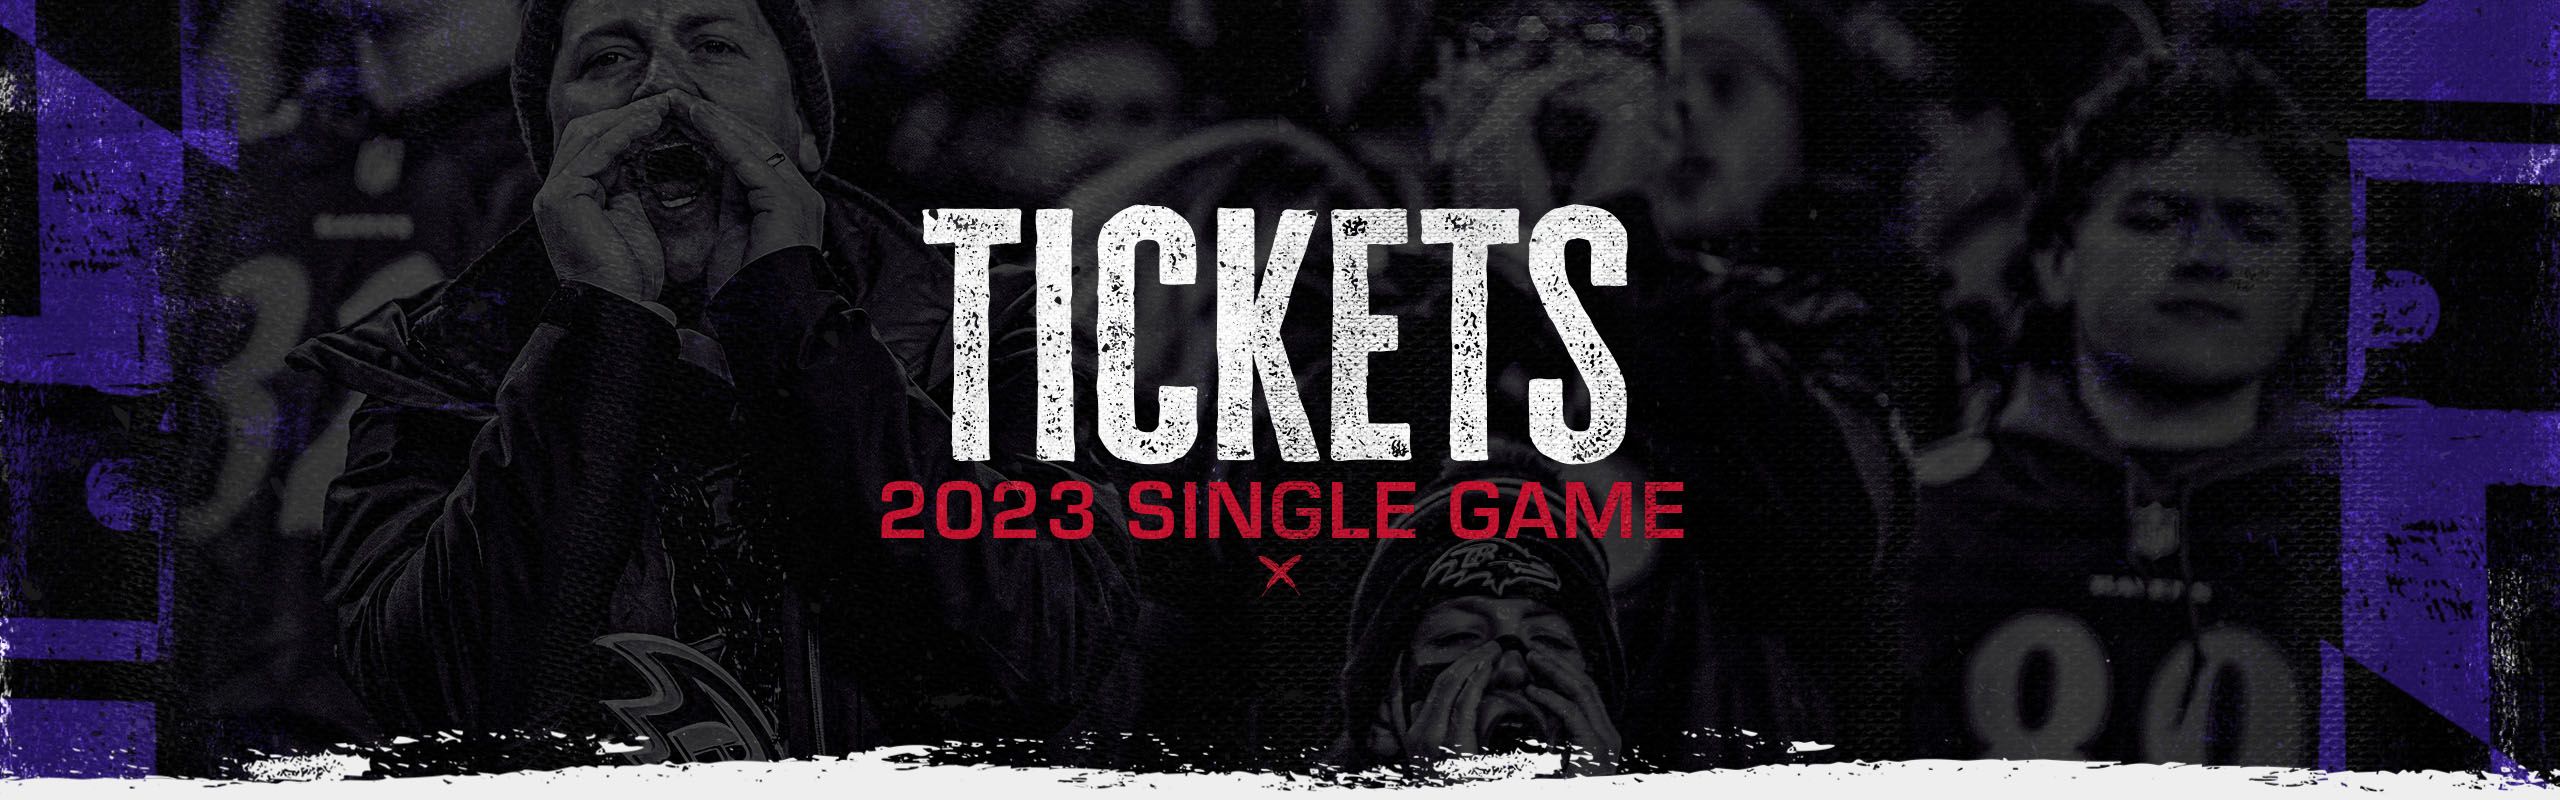 las vegas raiders single game tickets 2022